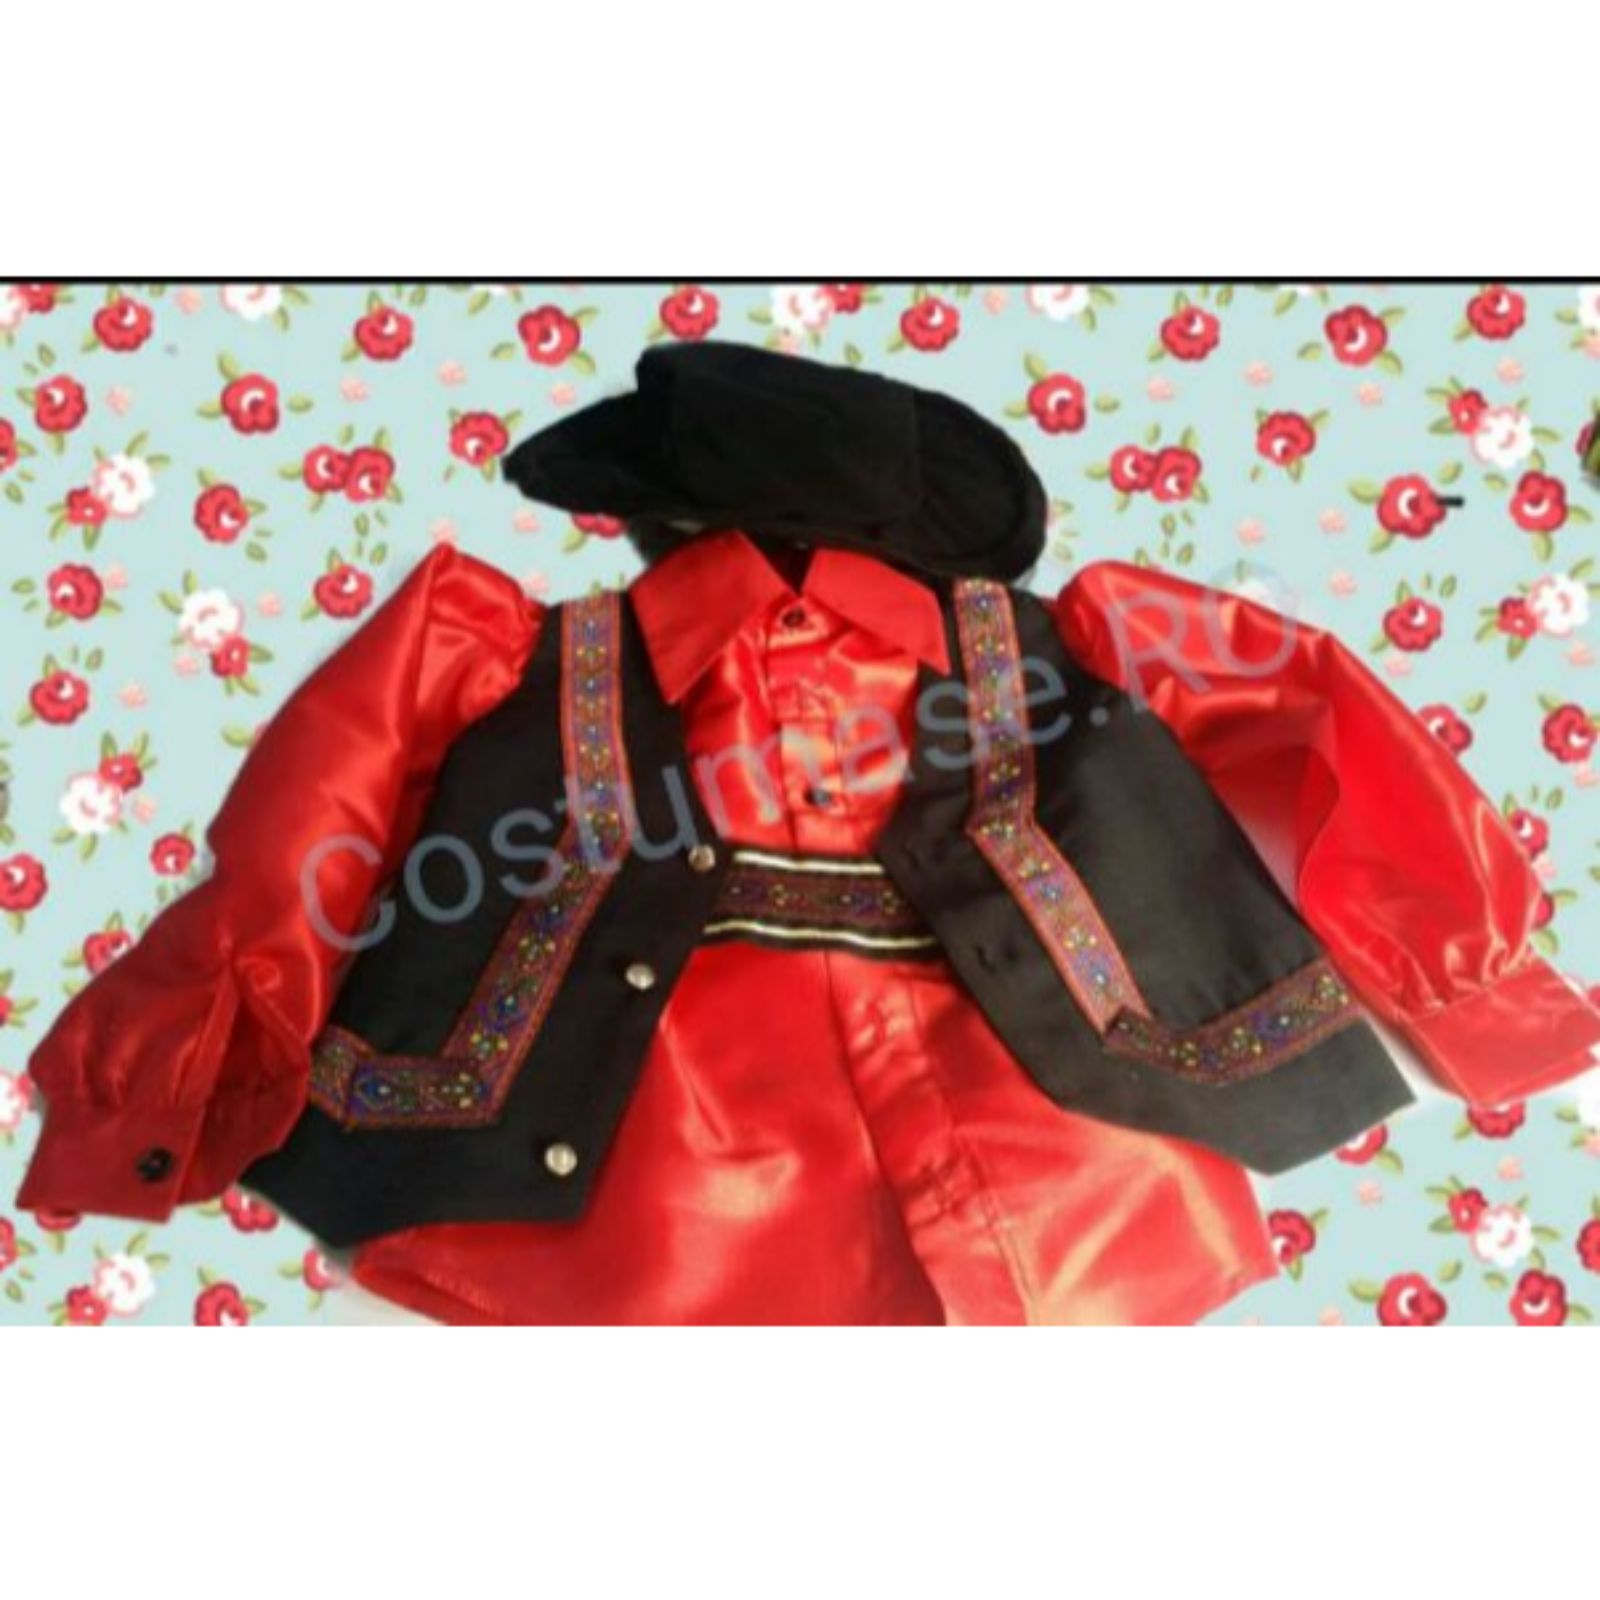 Costum țigan - roșu cu aplicații